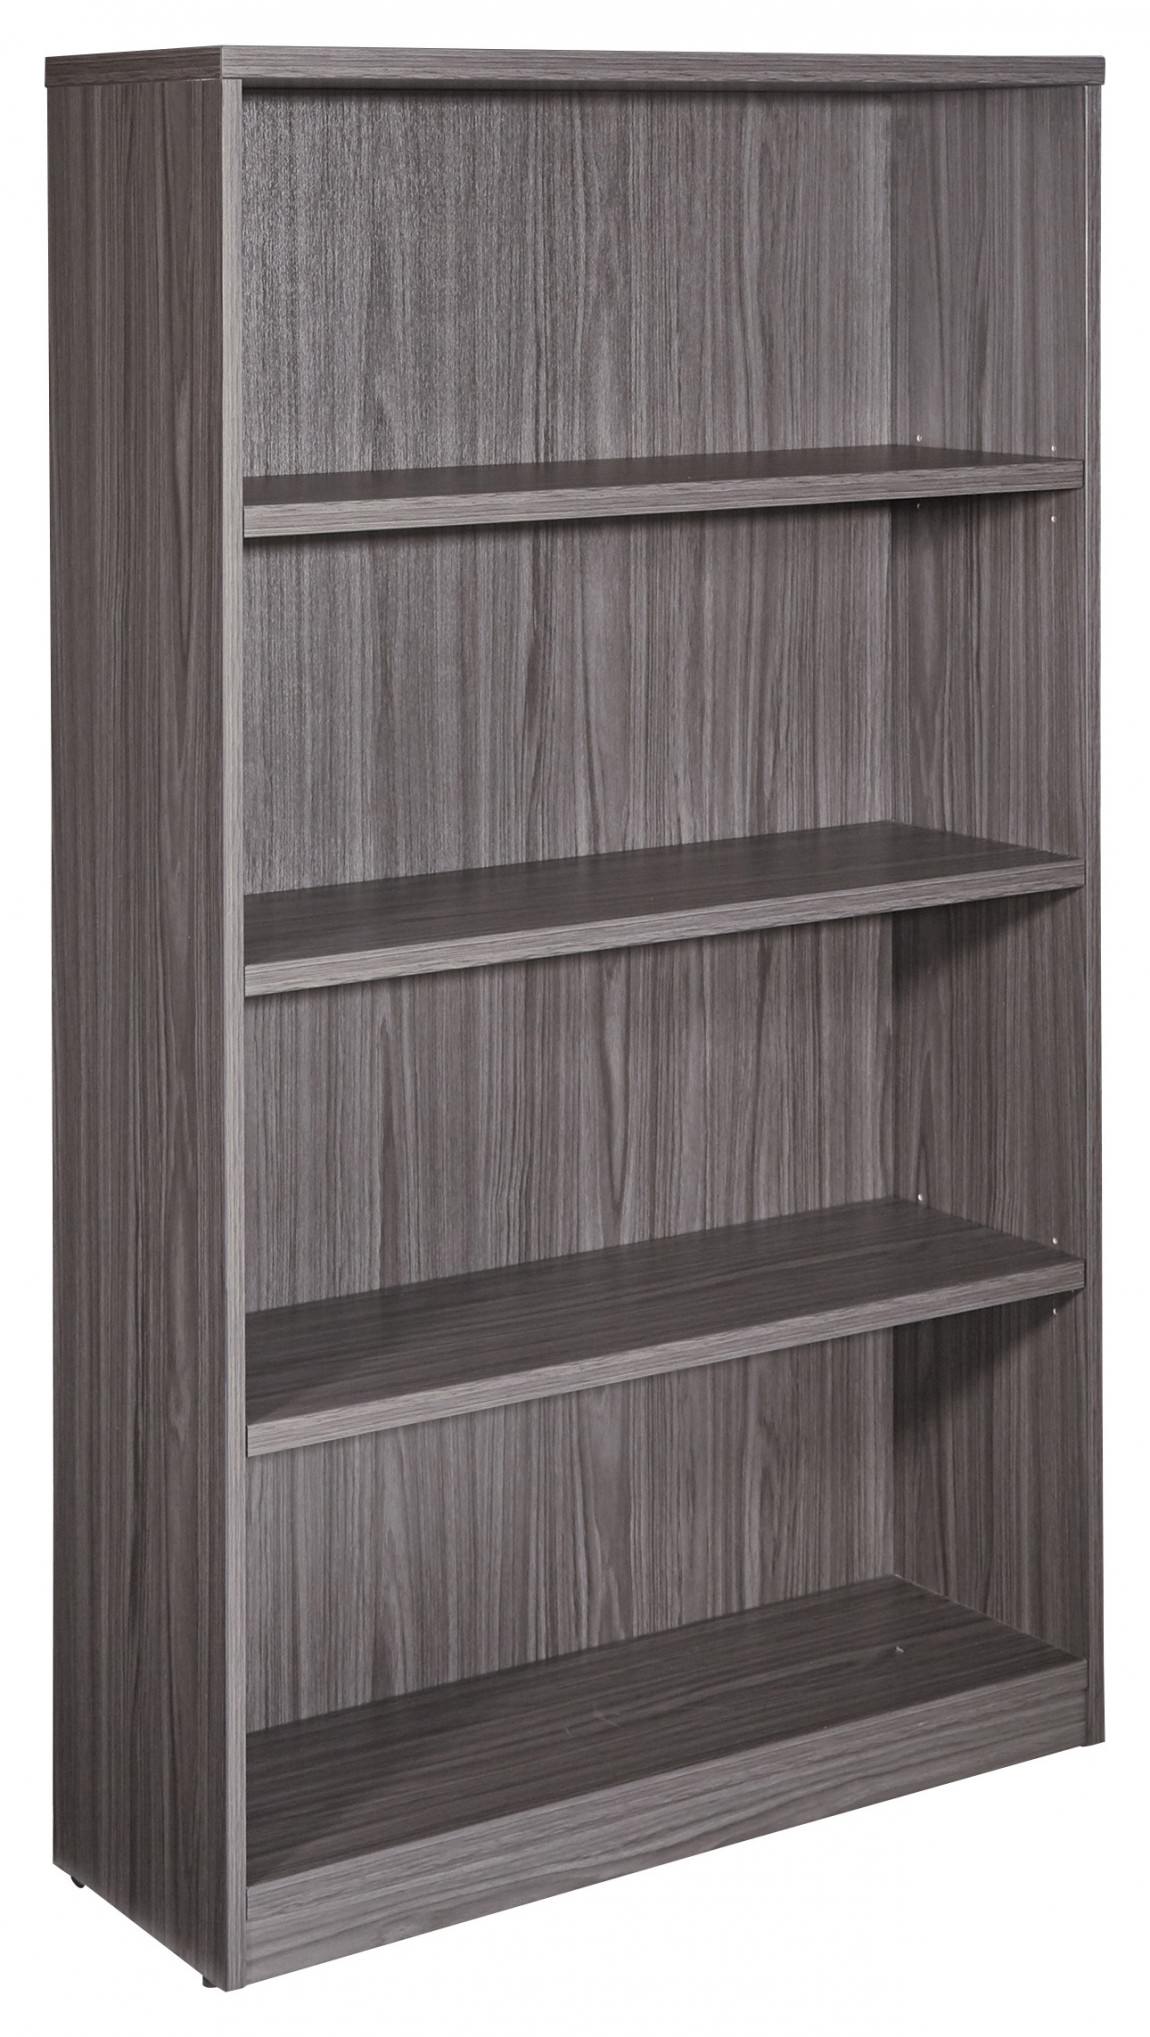 4 Shelf Bookcase - 60 Tall